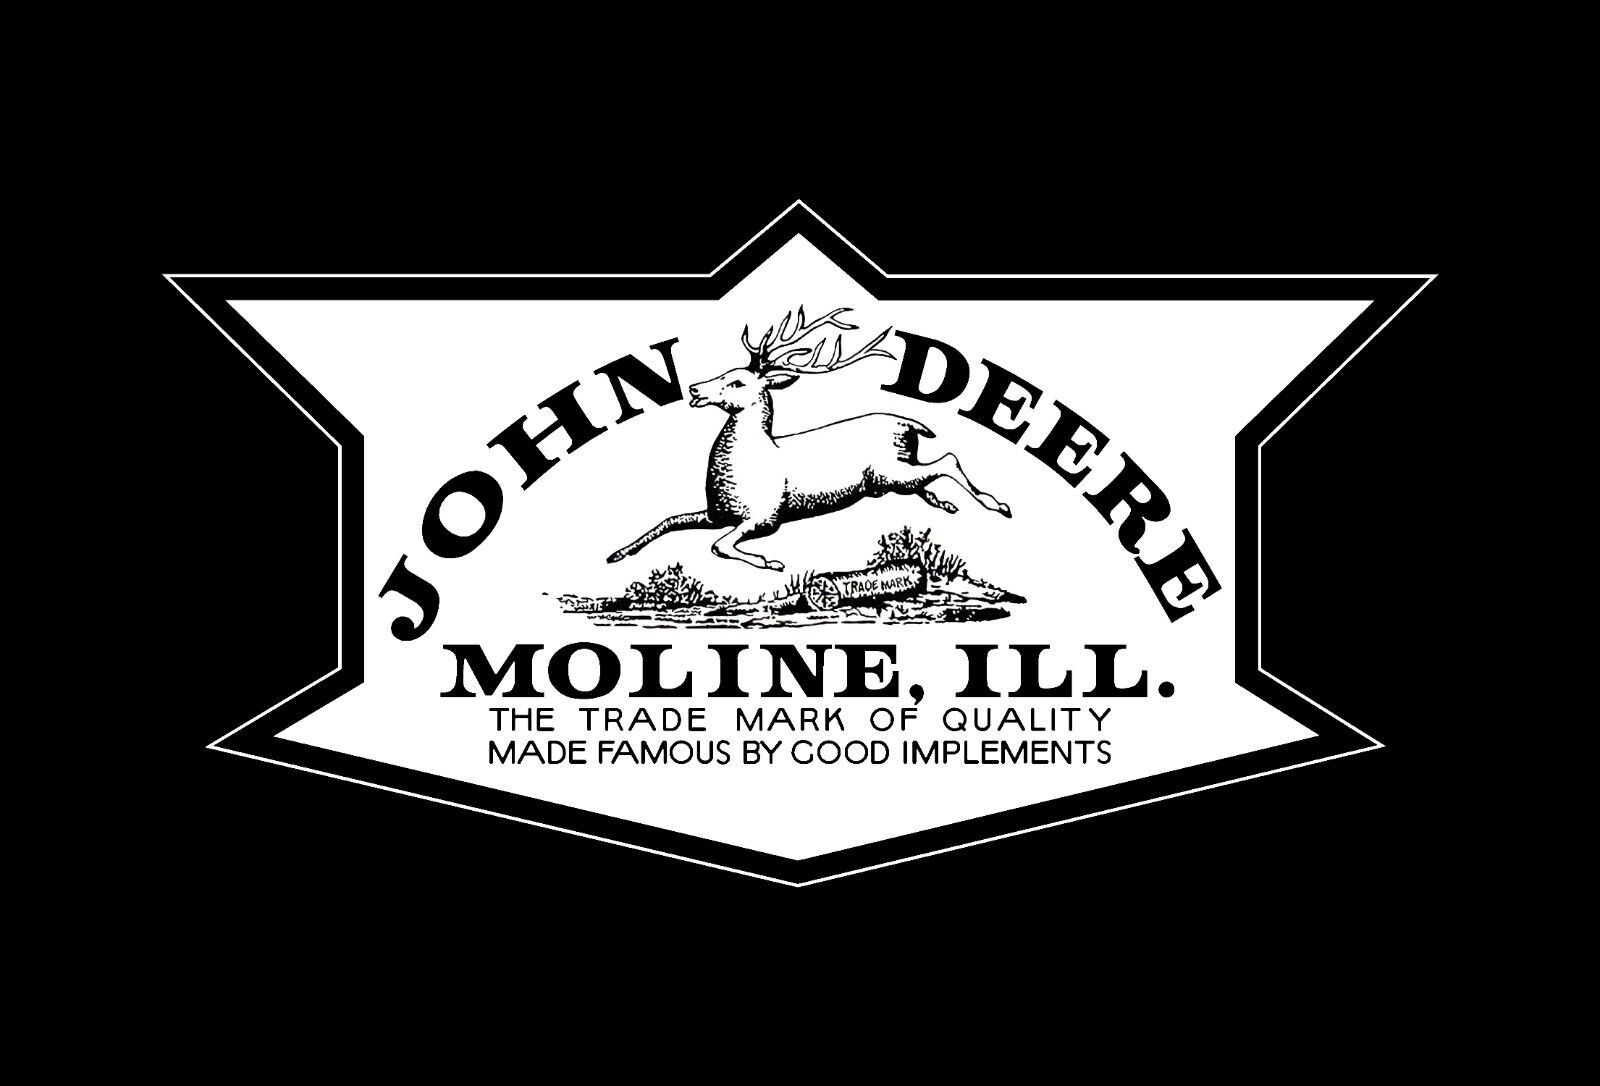 John Deere 1936 & 1912 Vintage Recreated - Black & White Logo - Emblem Decal